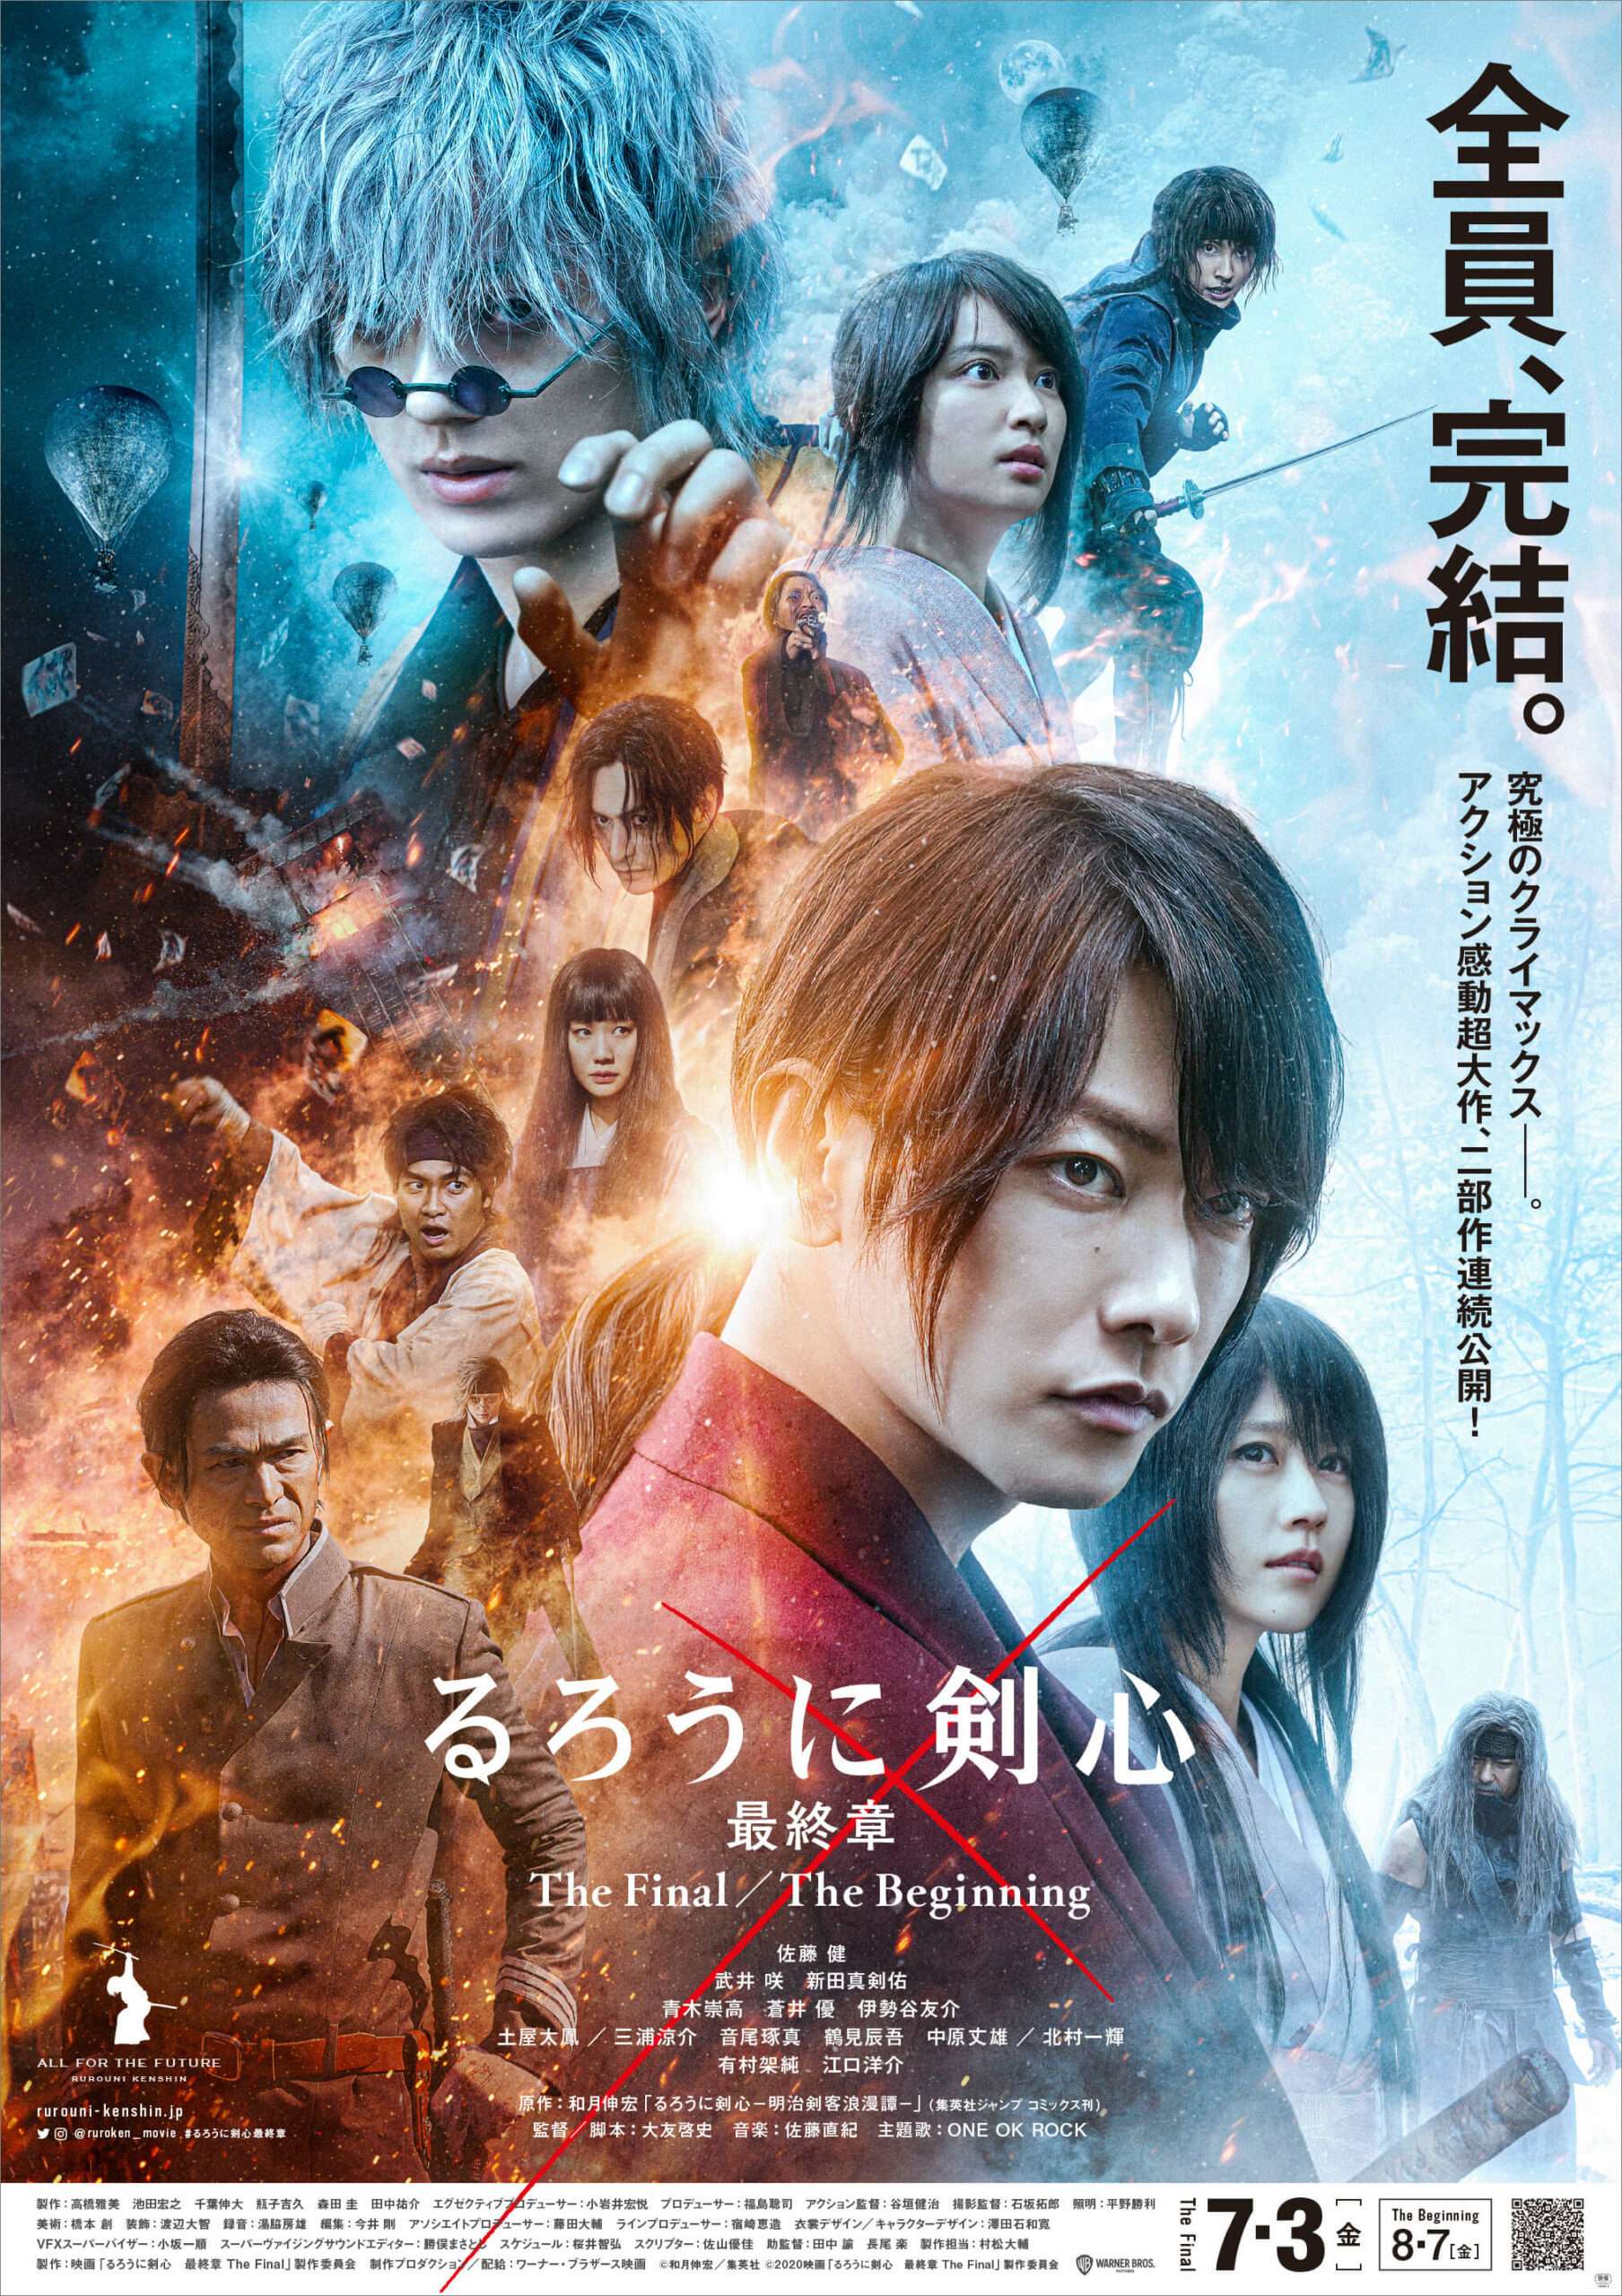 Rurouni Kenshin Live Action 'Capítulo Final' - História será diferente do Manga